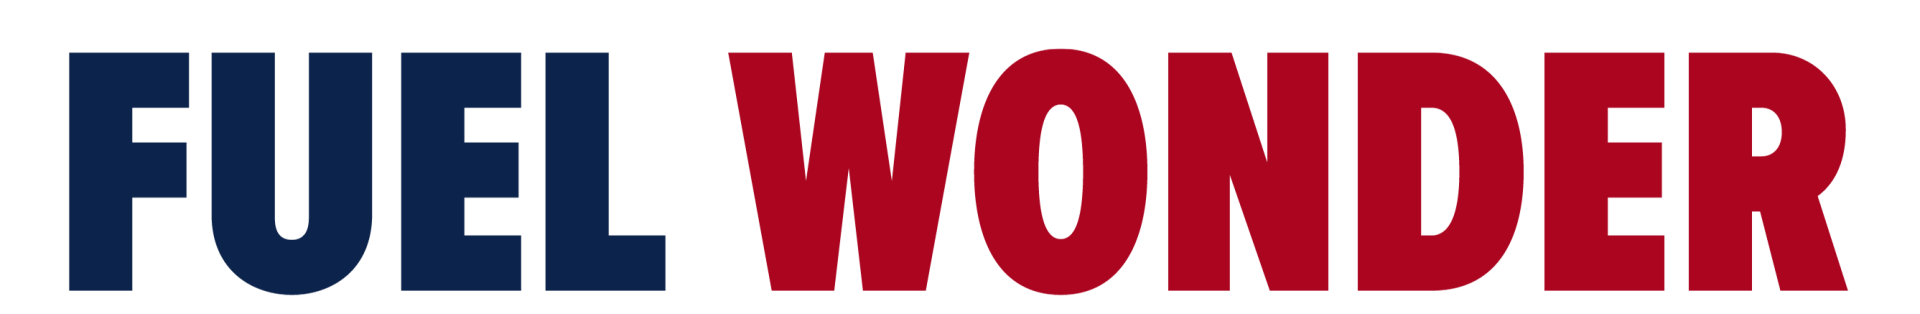 Fuel wonder logo